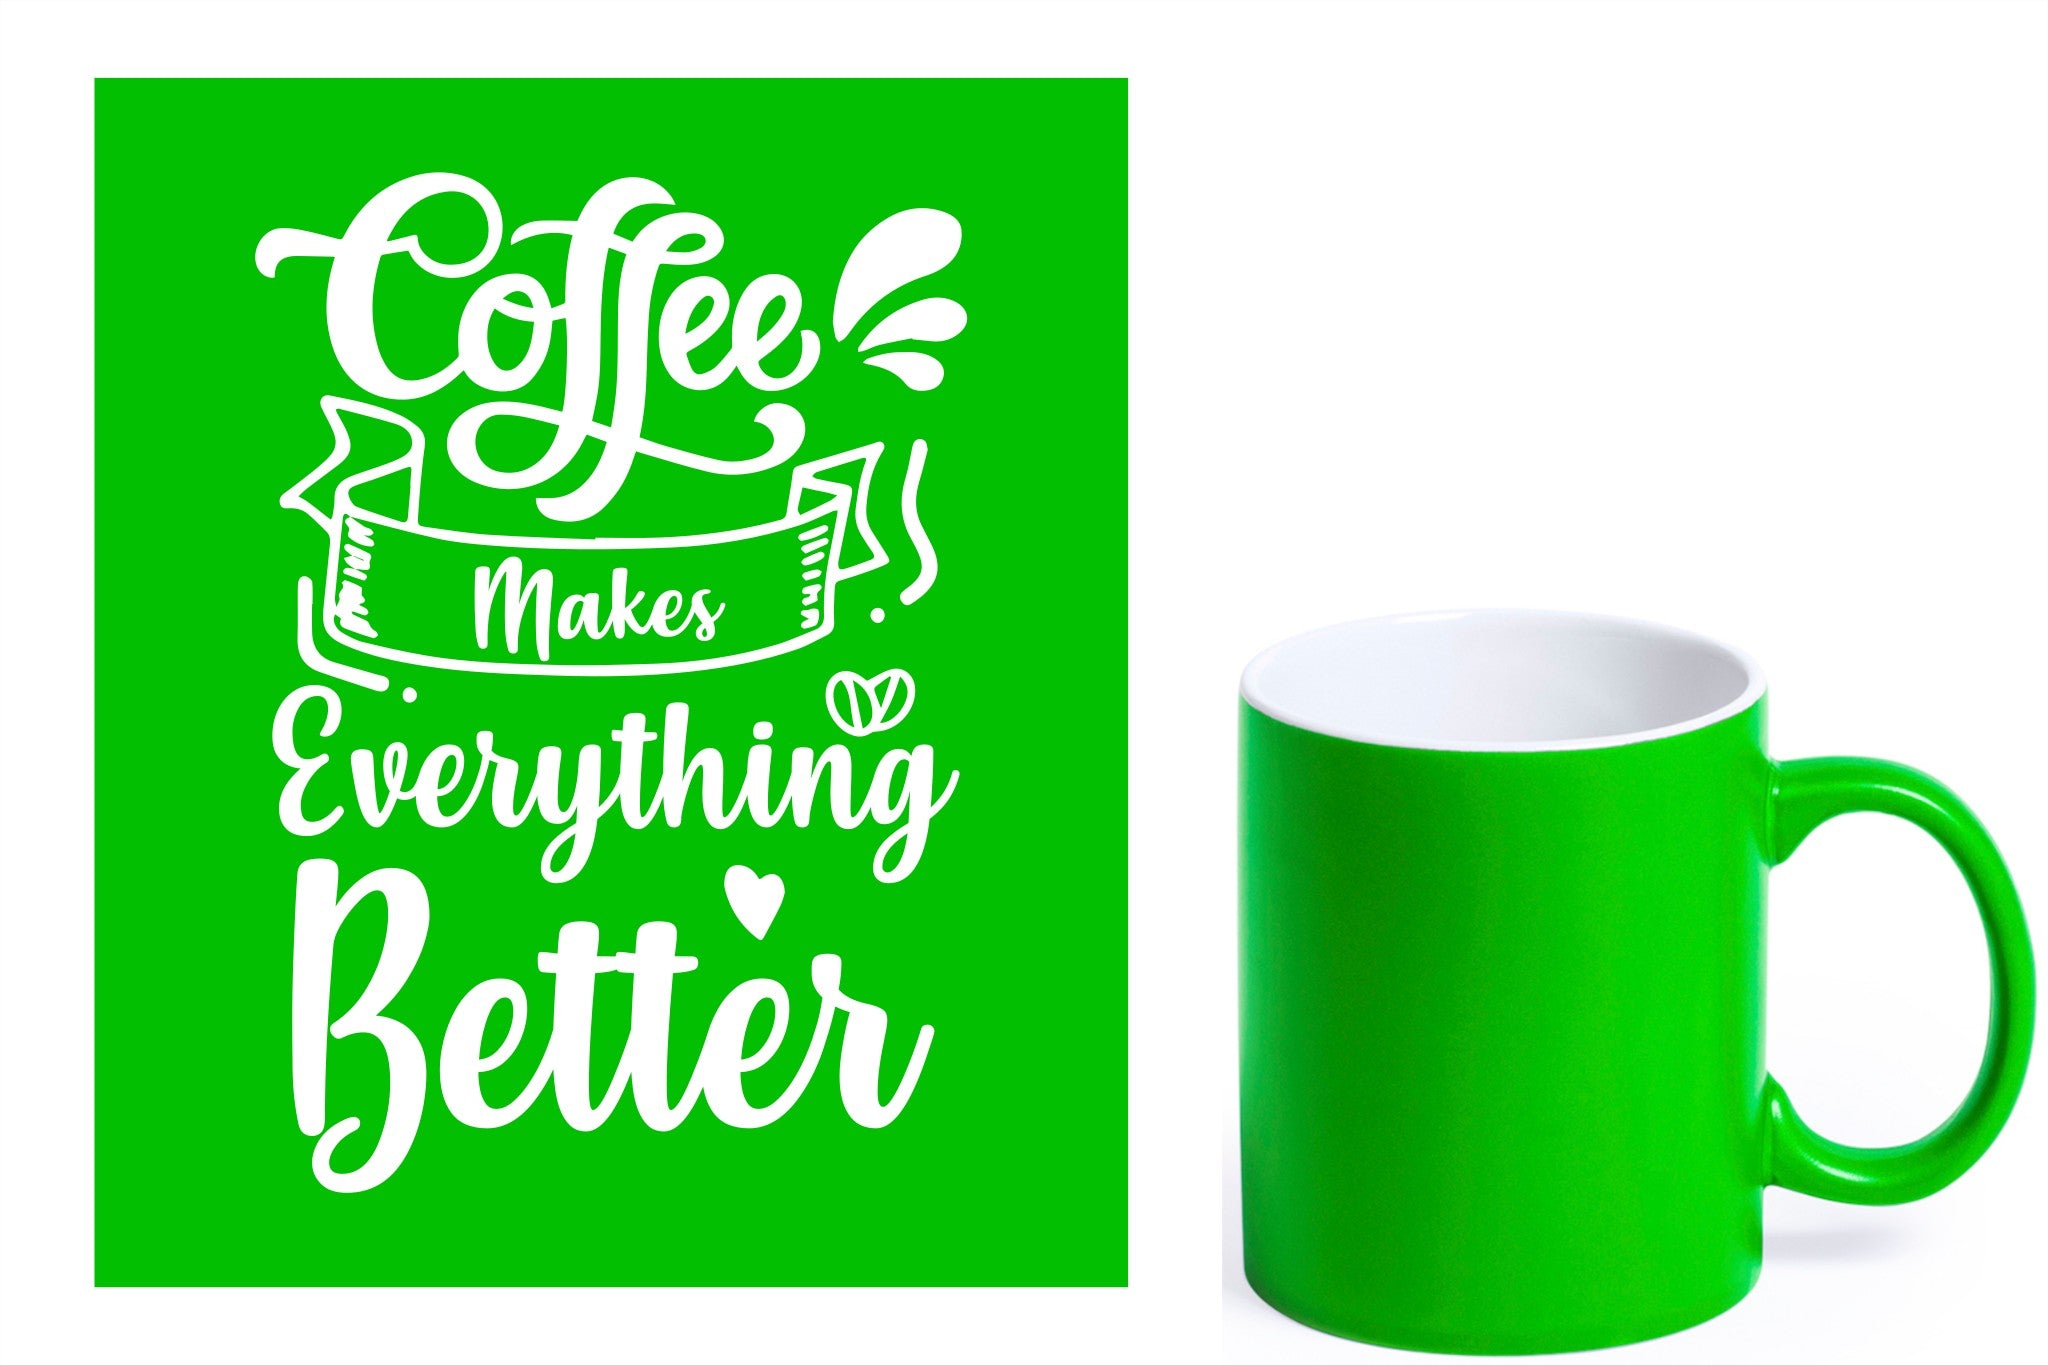 groene keramische mok met witte gravure  'Coffee makes everything better'.